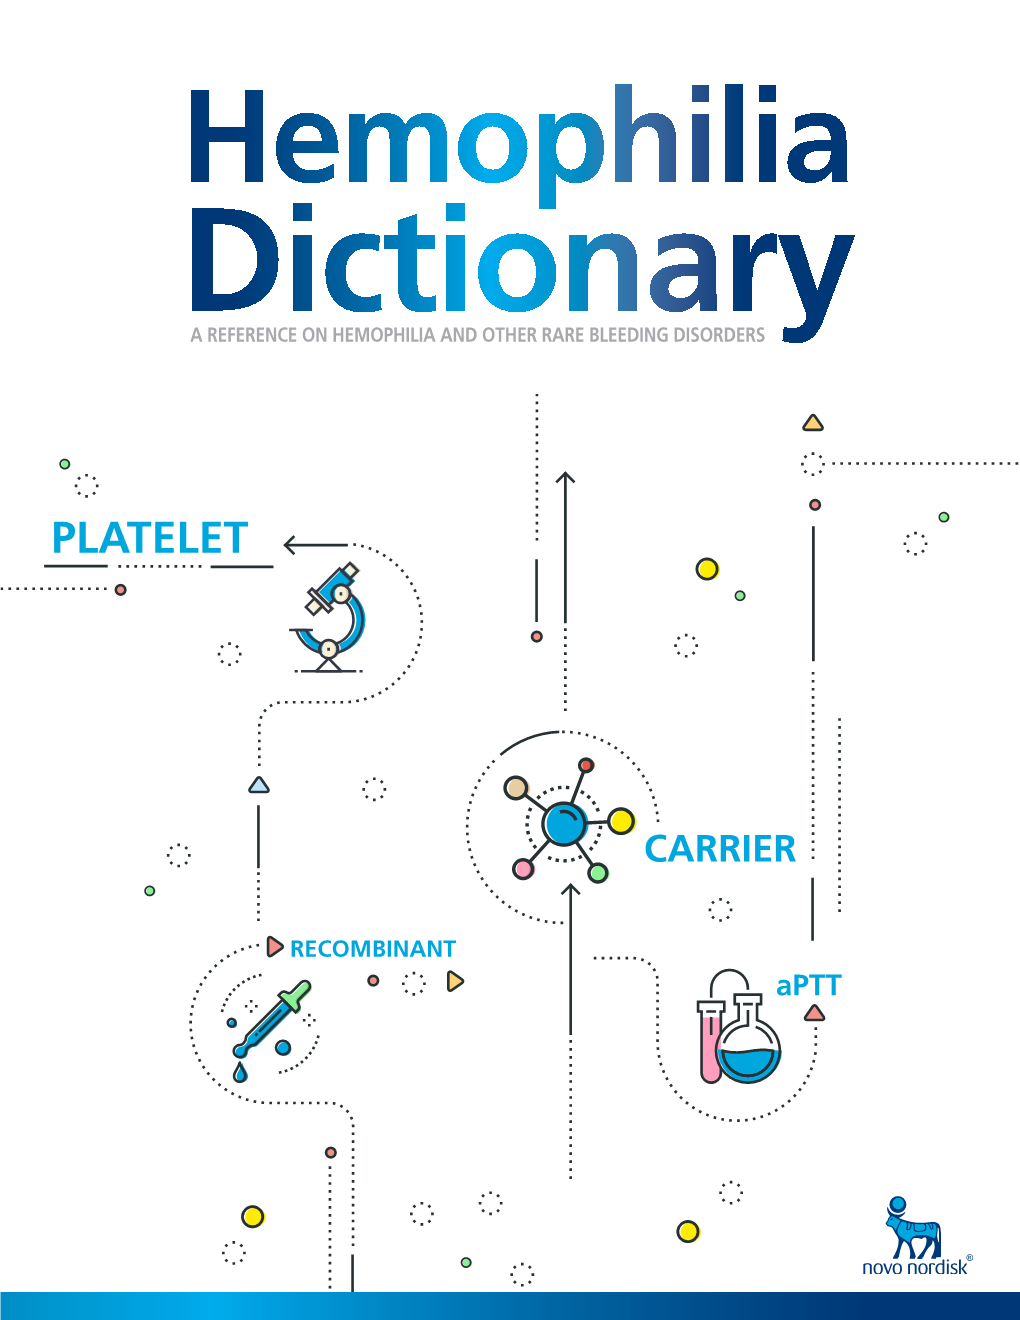 Download the Hemophilia Dictionary